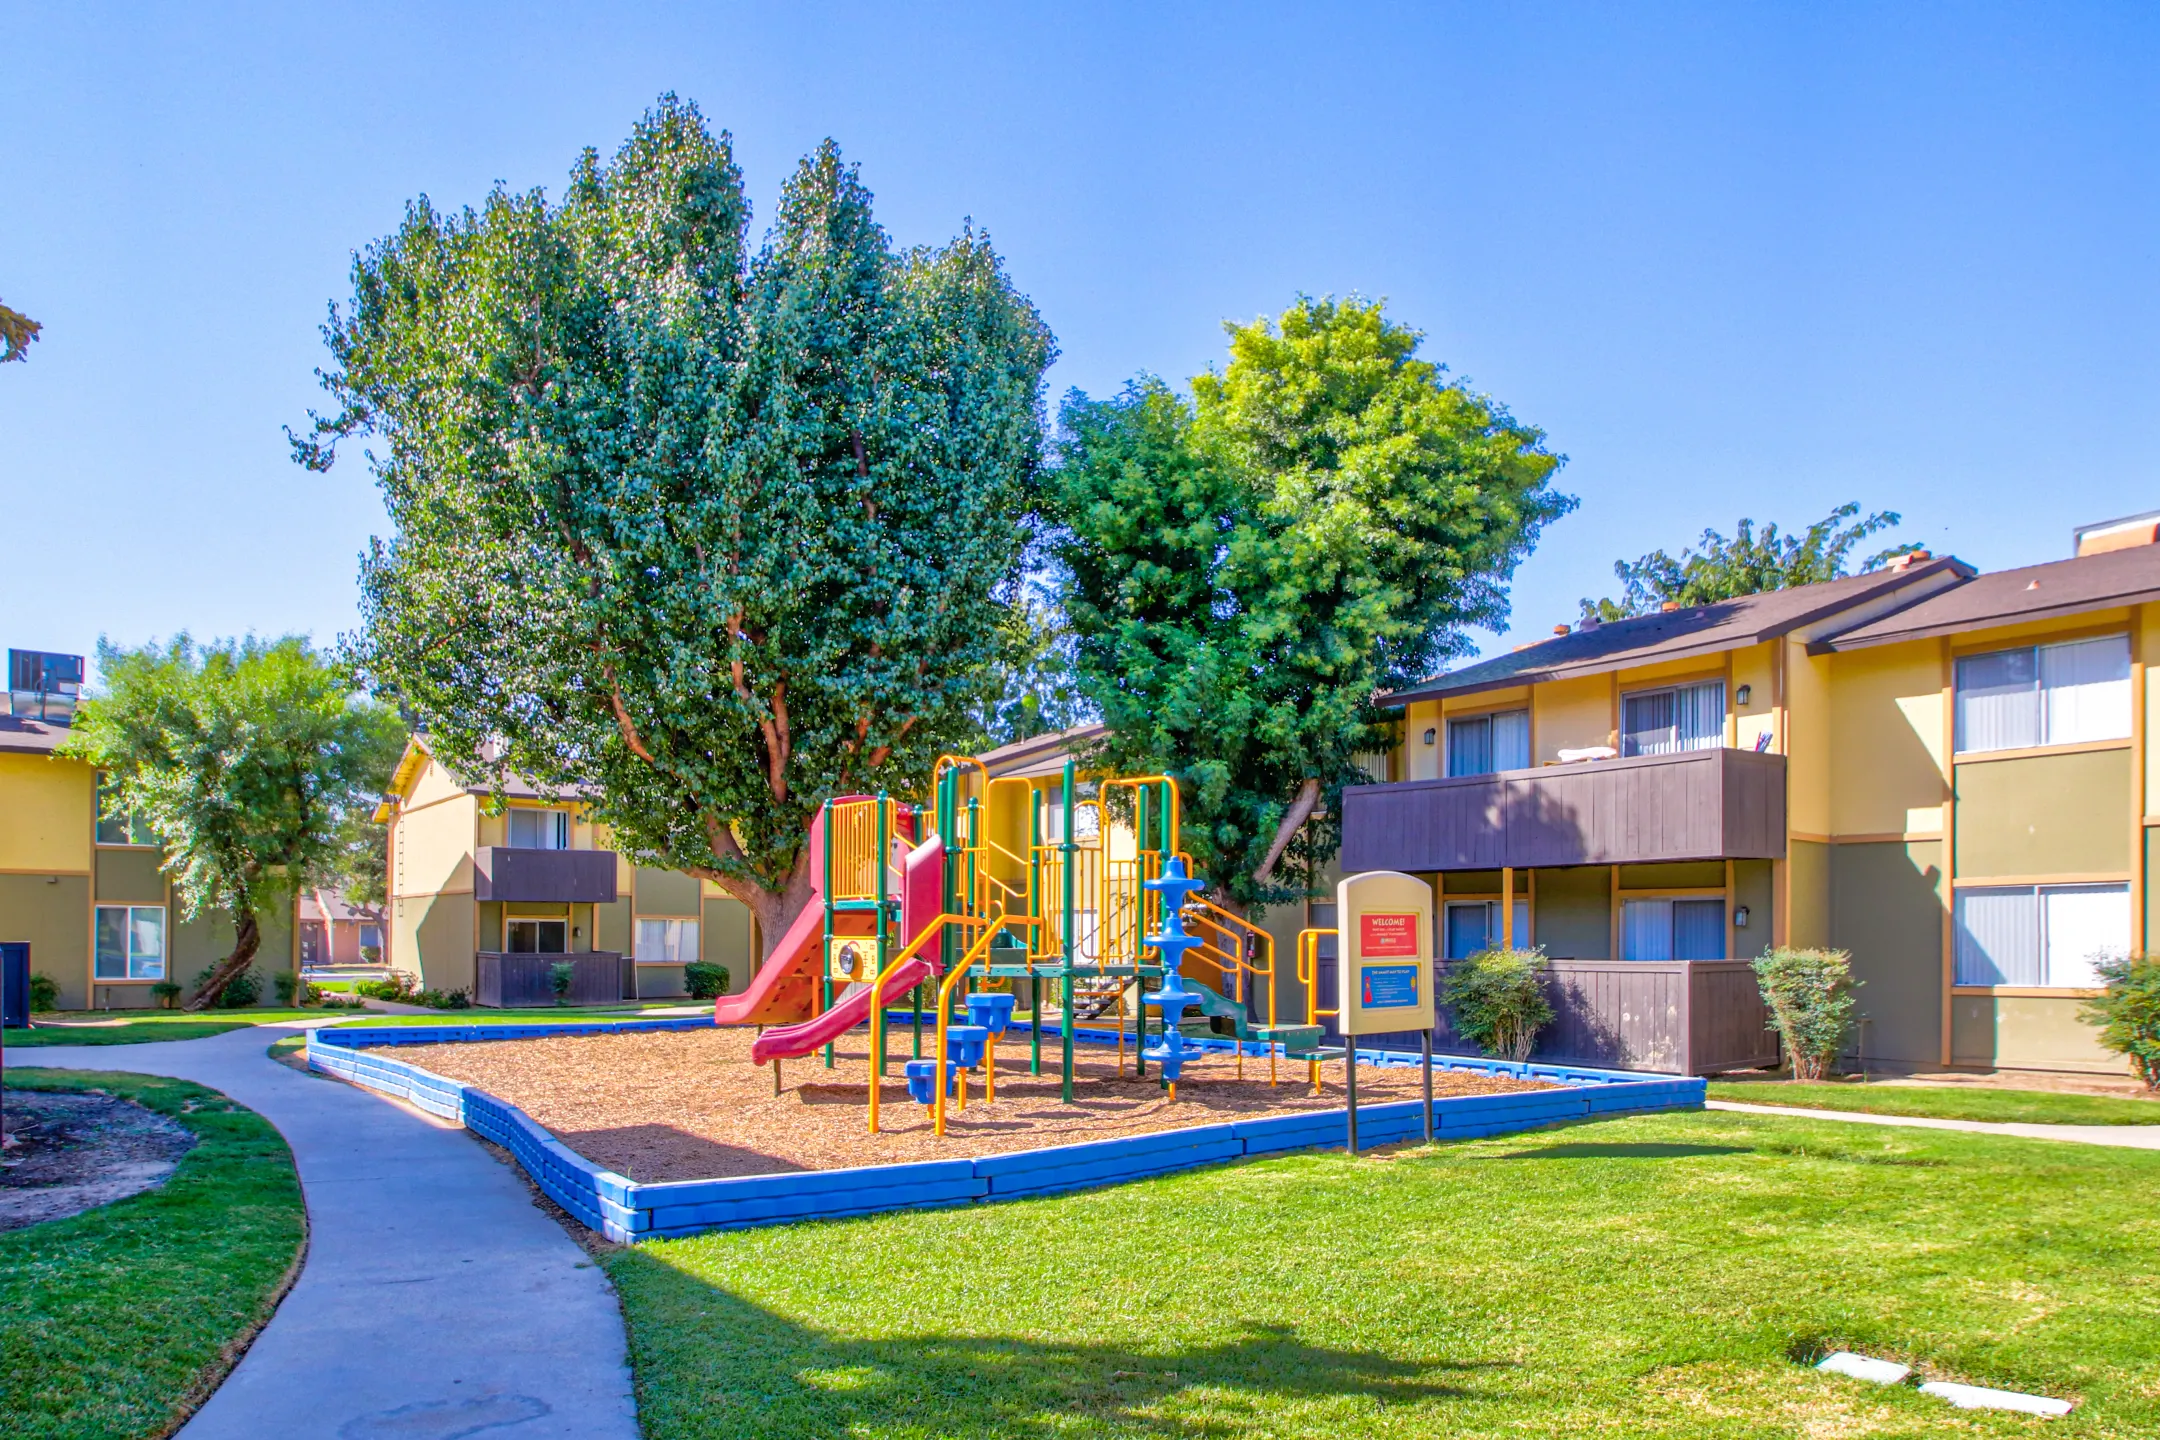 Playground - Santa Rosa - Bakersfield, CA